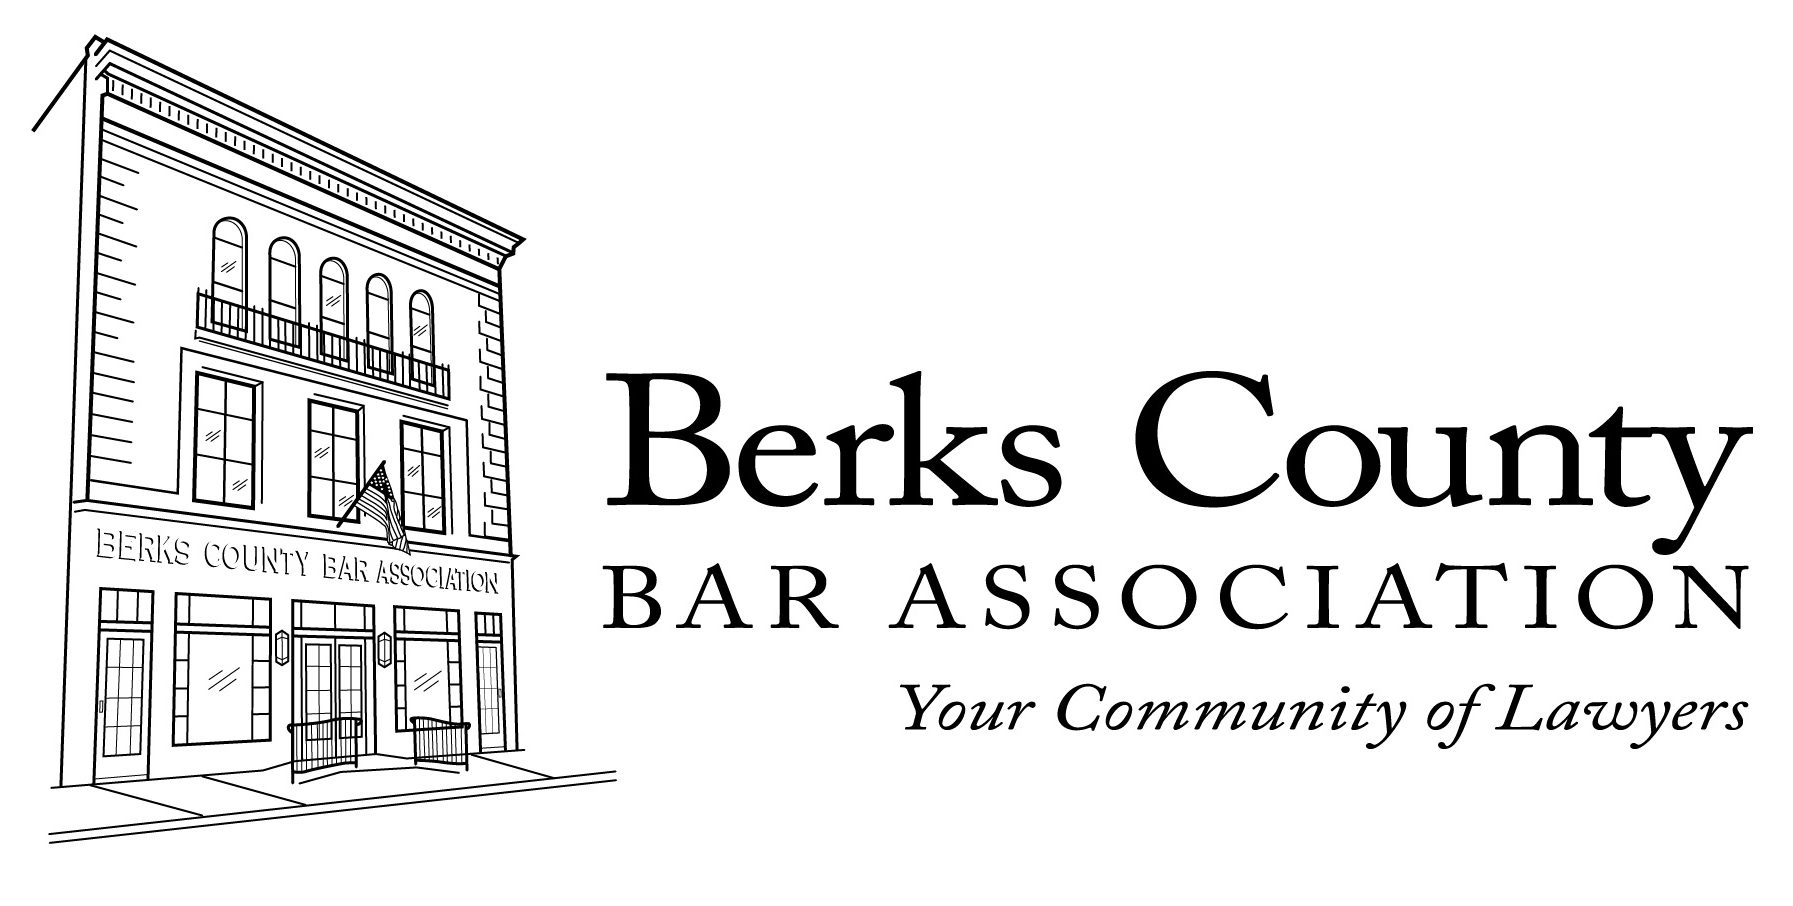 Berks County Bar Association in PA